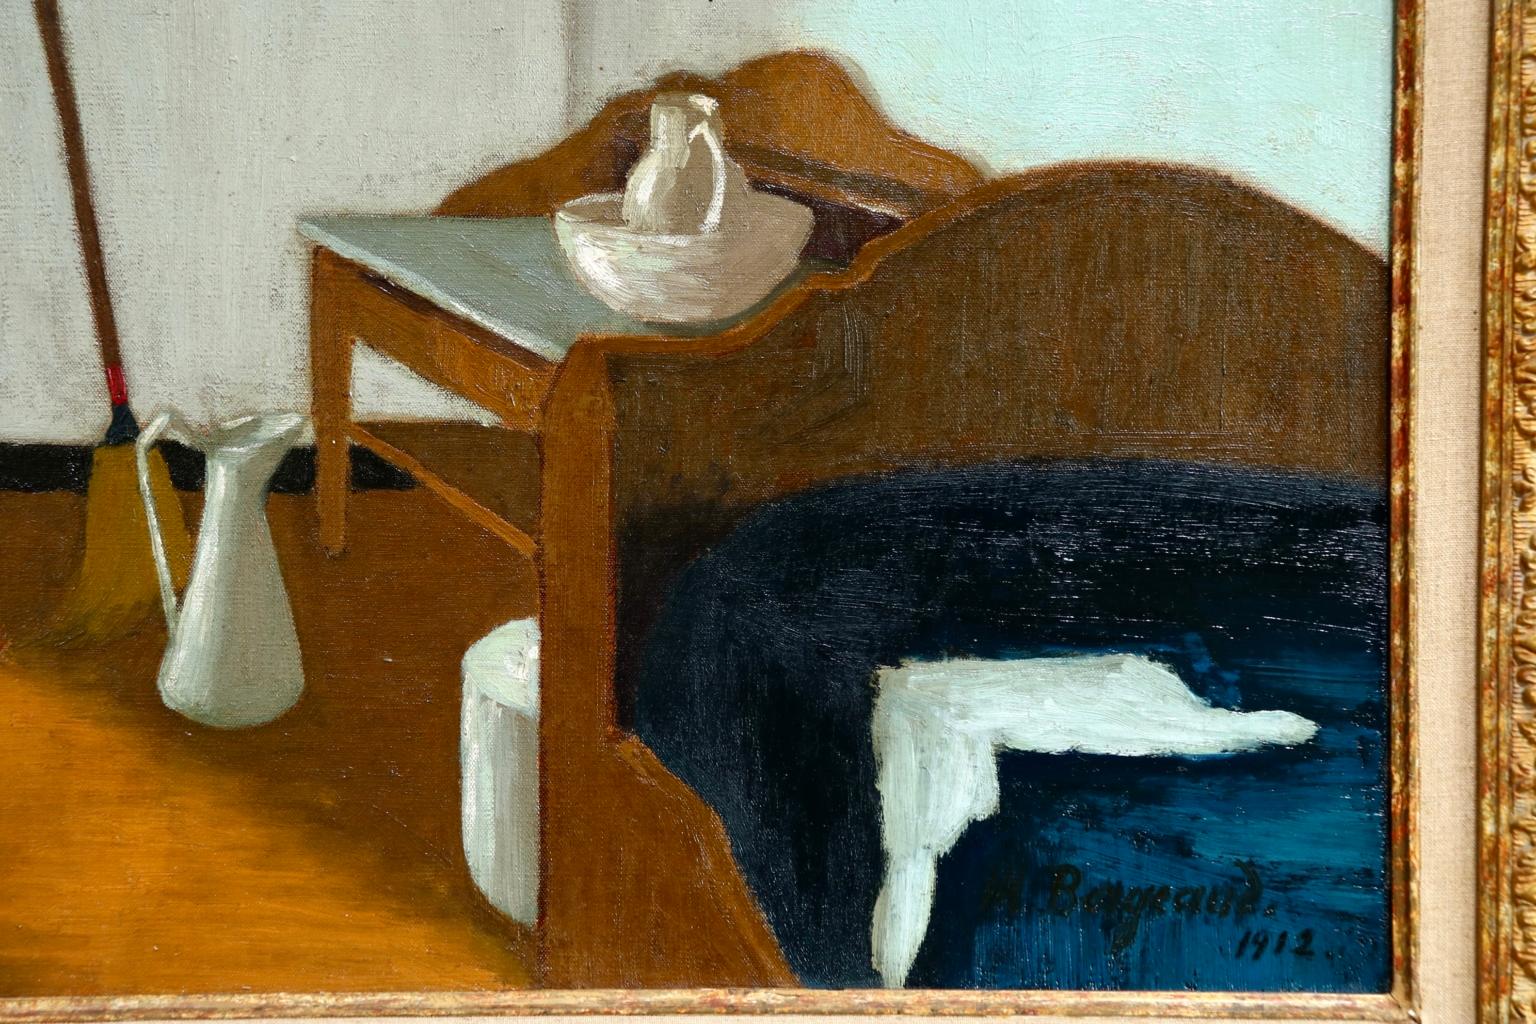 Bonne a la fenetre - Post Impressionist Oil, Figure in Interior by M Borgeaud - Gray Interior Painting by Marius Borgeaud